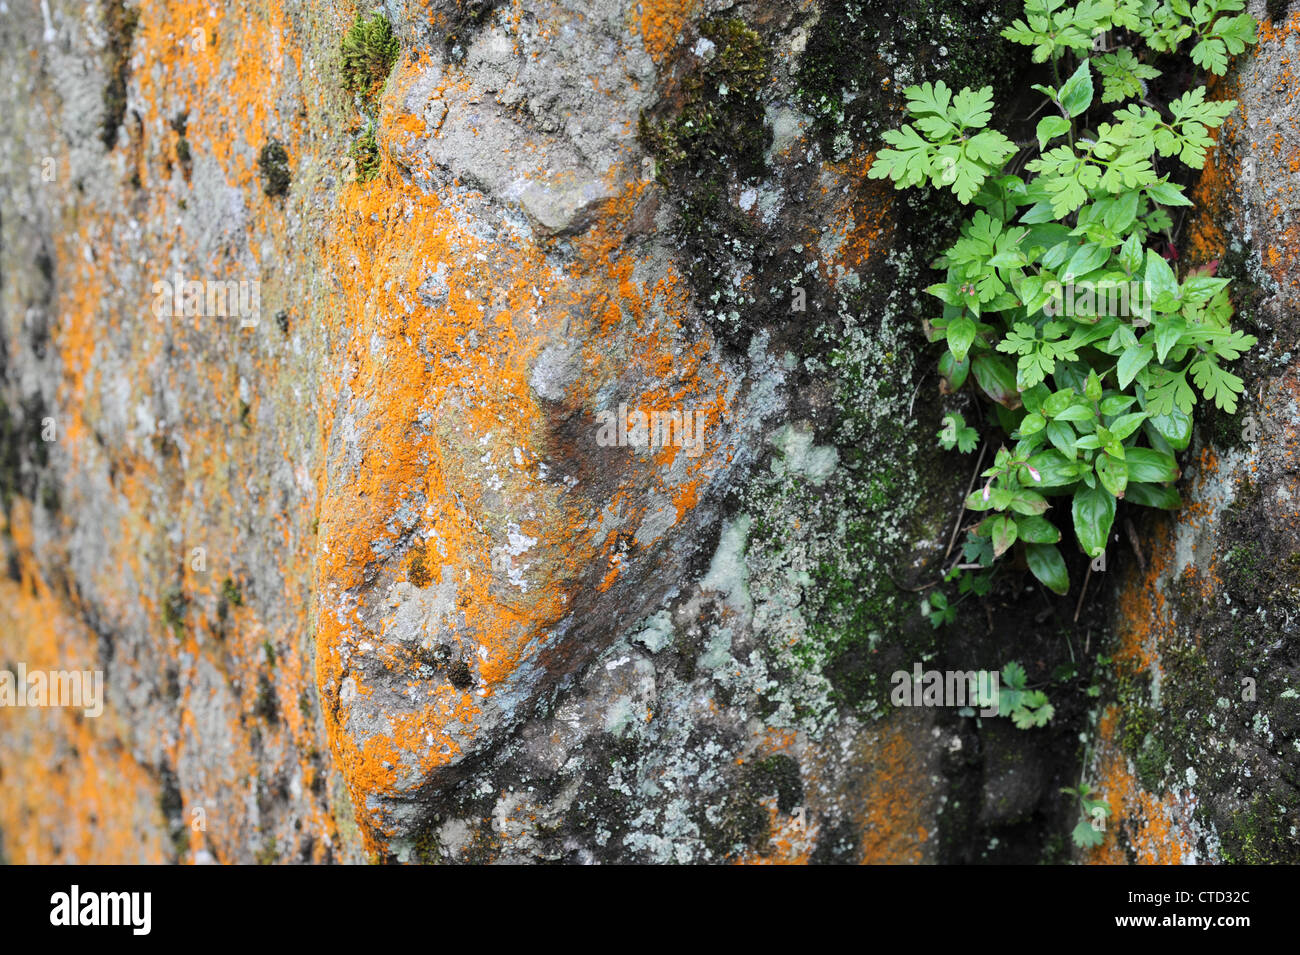 Orange lichen and plants growing on rocks. Stock Photo